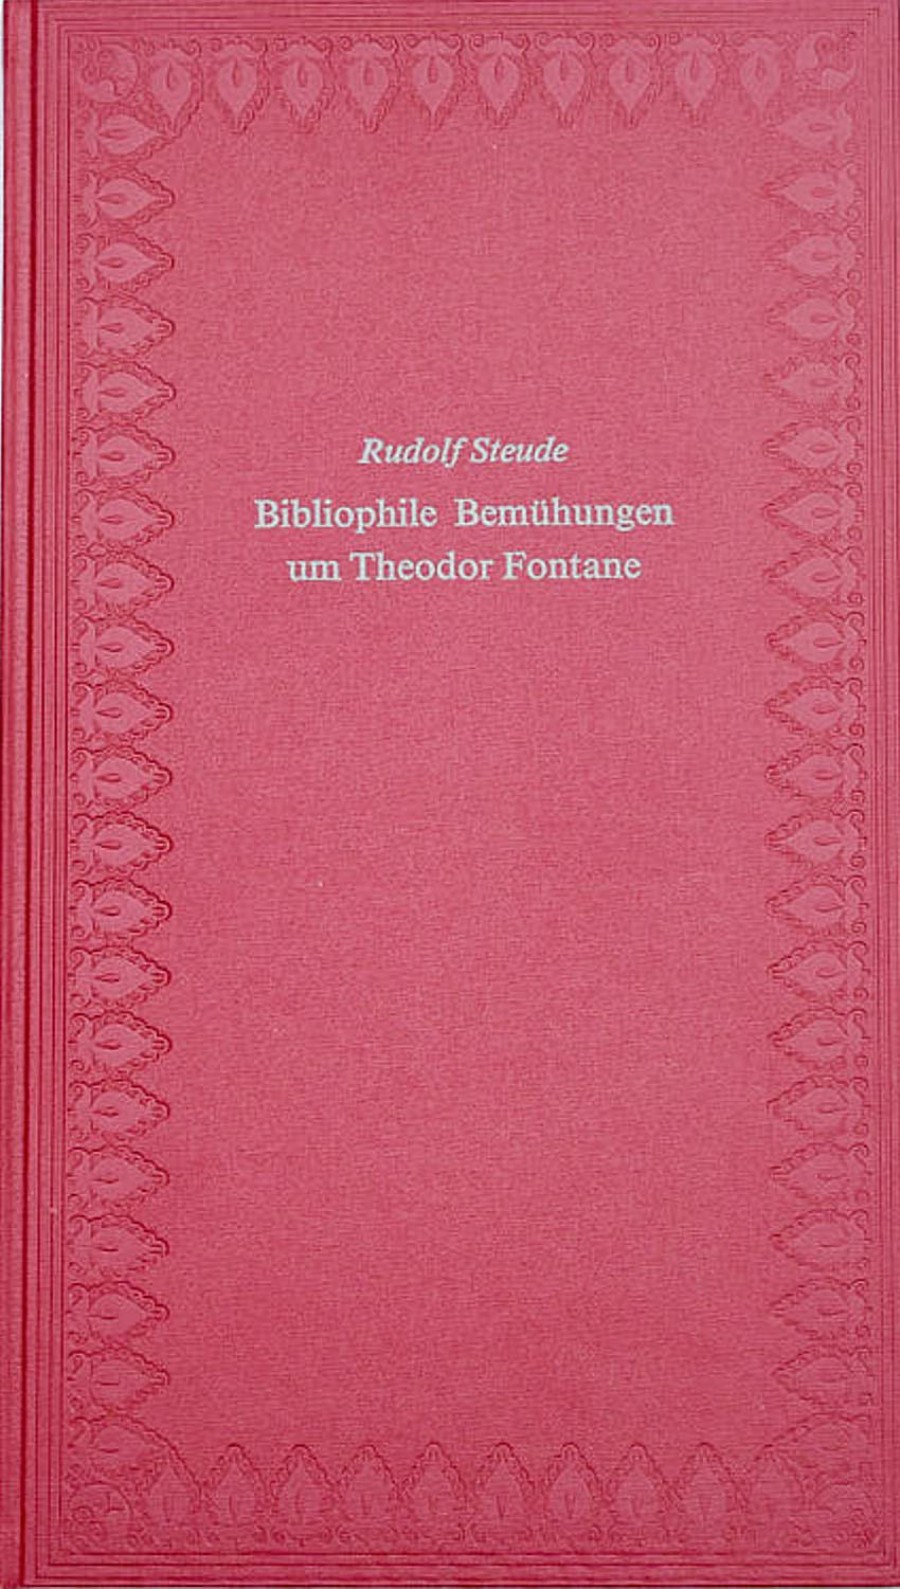 Rudolf Steude: Bibliophile Bemühungen um Theodor Fontane